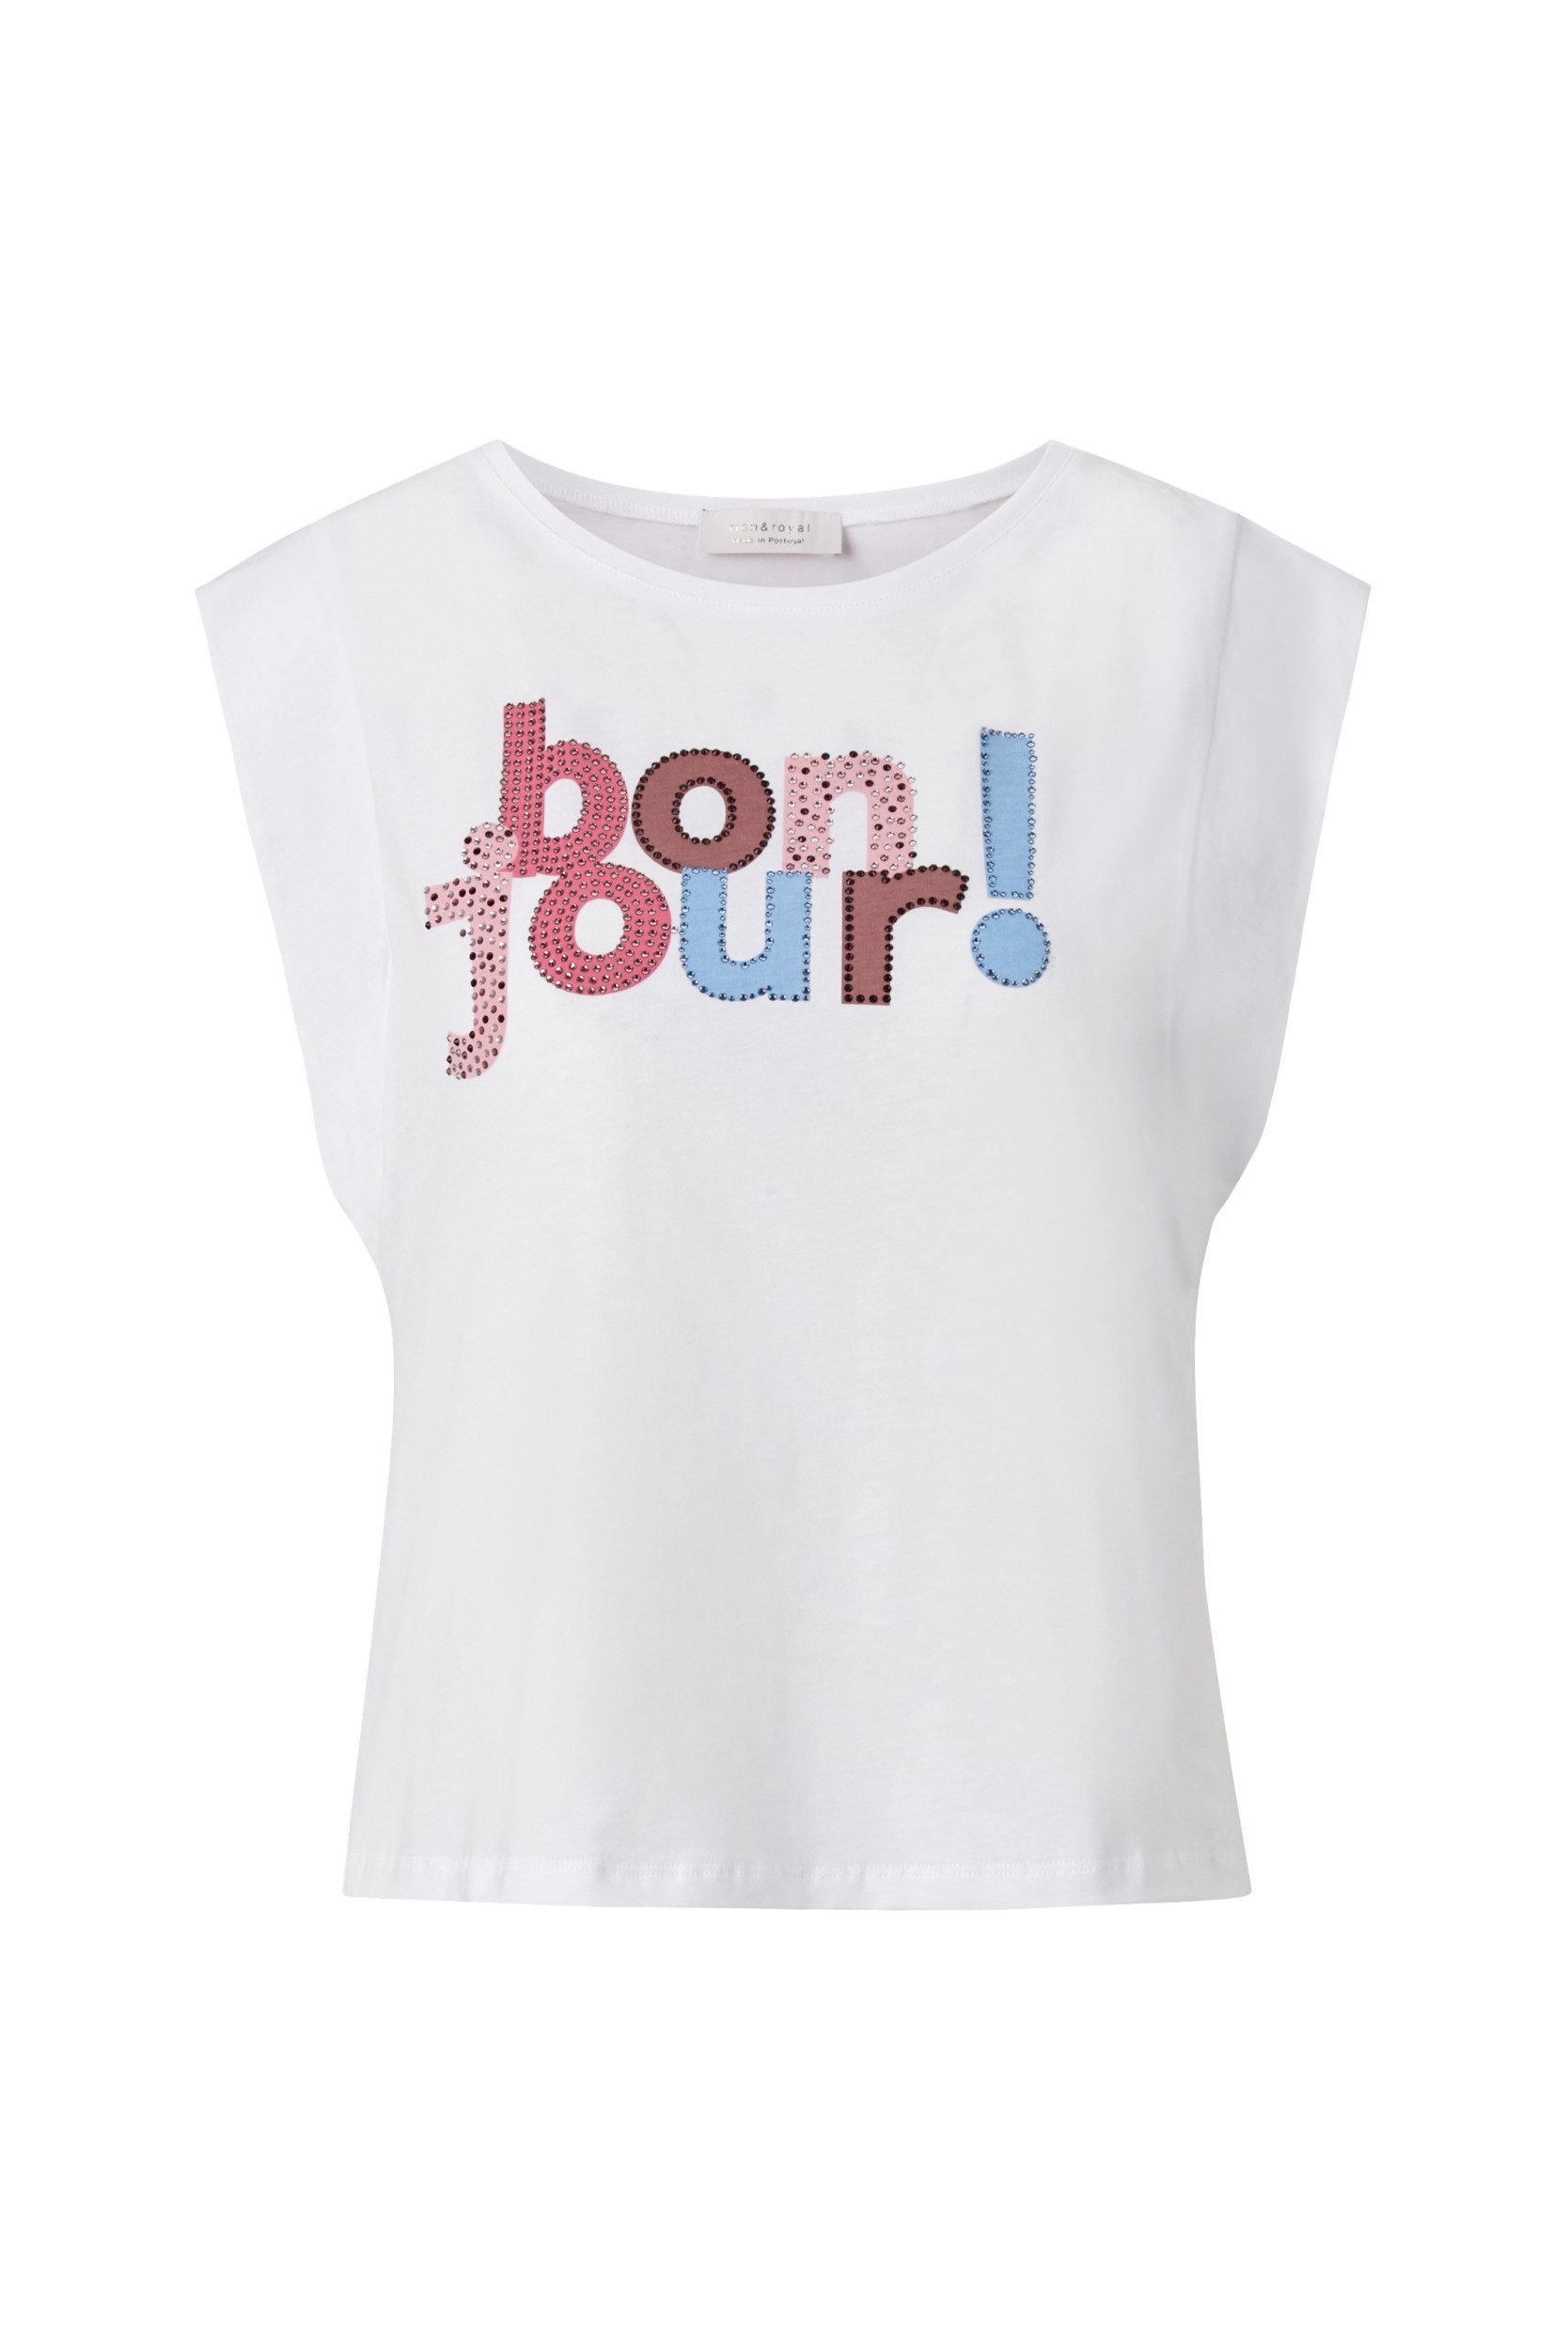 Rich & Royal T-Shirt top with print boujour! organic